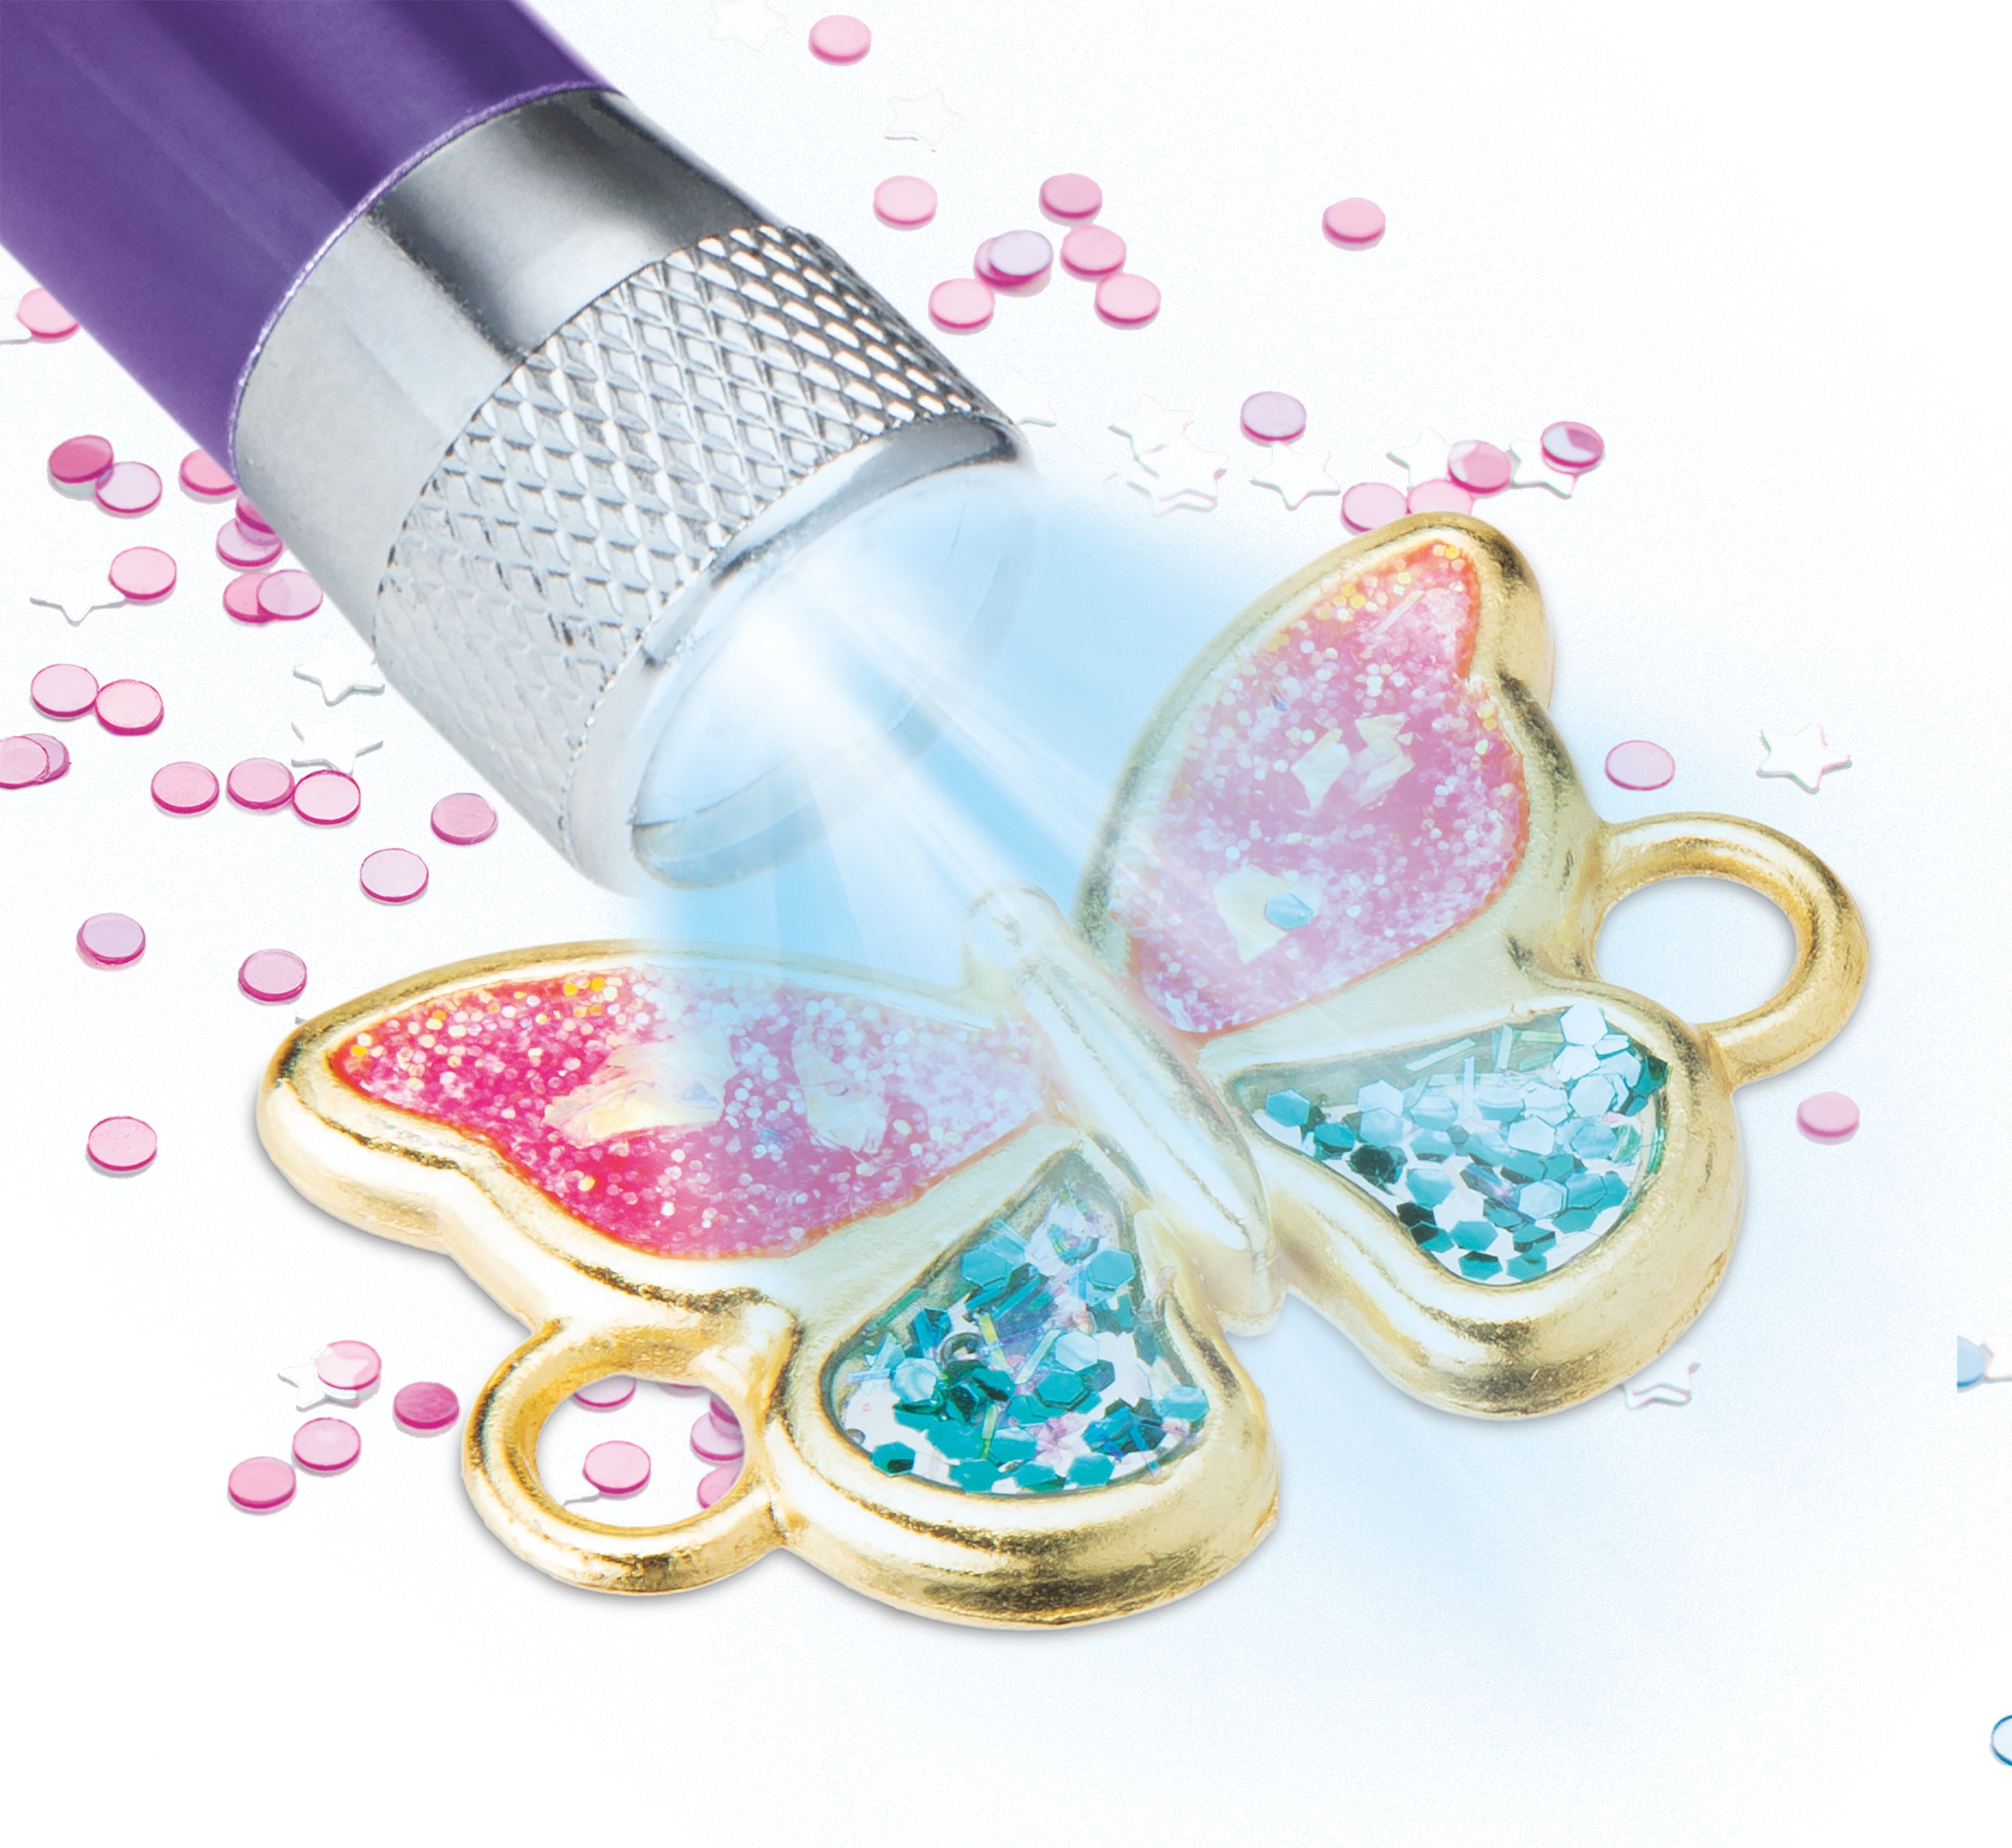 Cra-z-art Shimmer N Sparkle Gemex Sparkling Crystal Jewelry Kit, Craft Kits, Baby & Toys